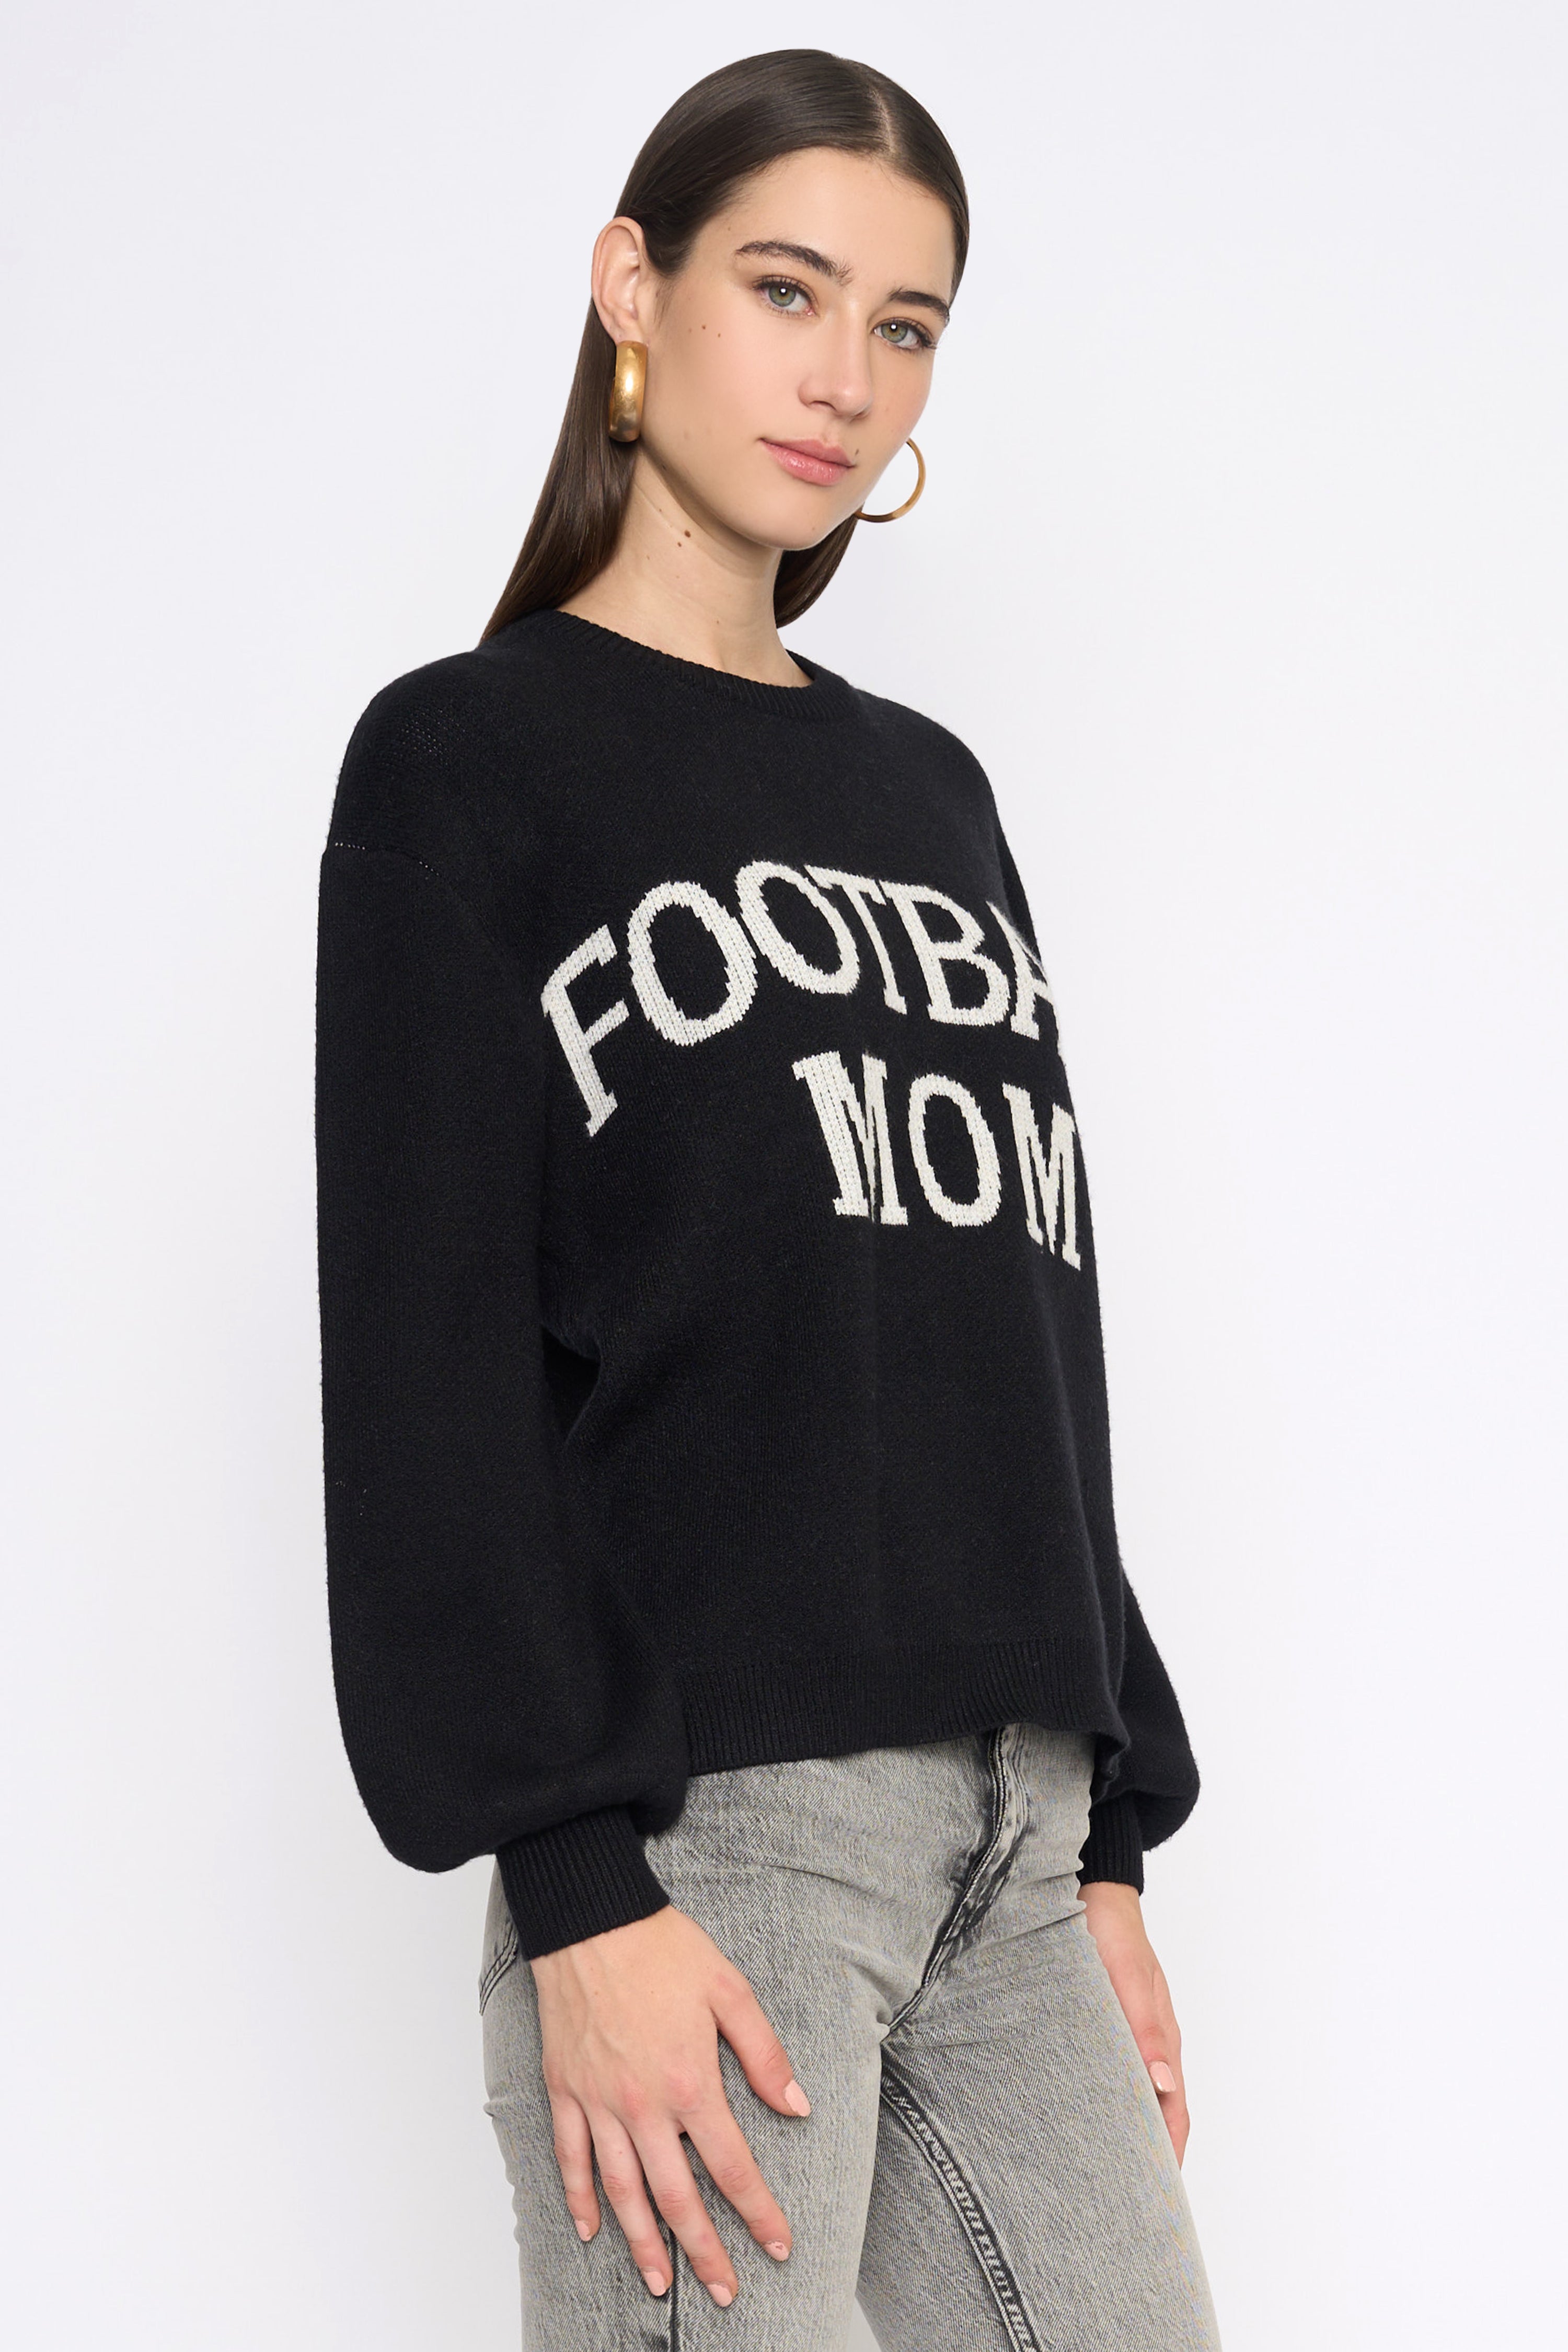 Football Mom Sweater